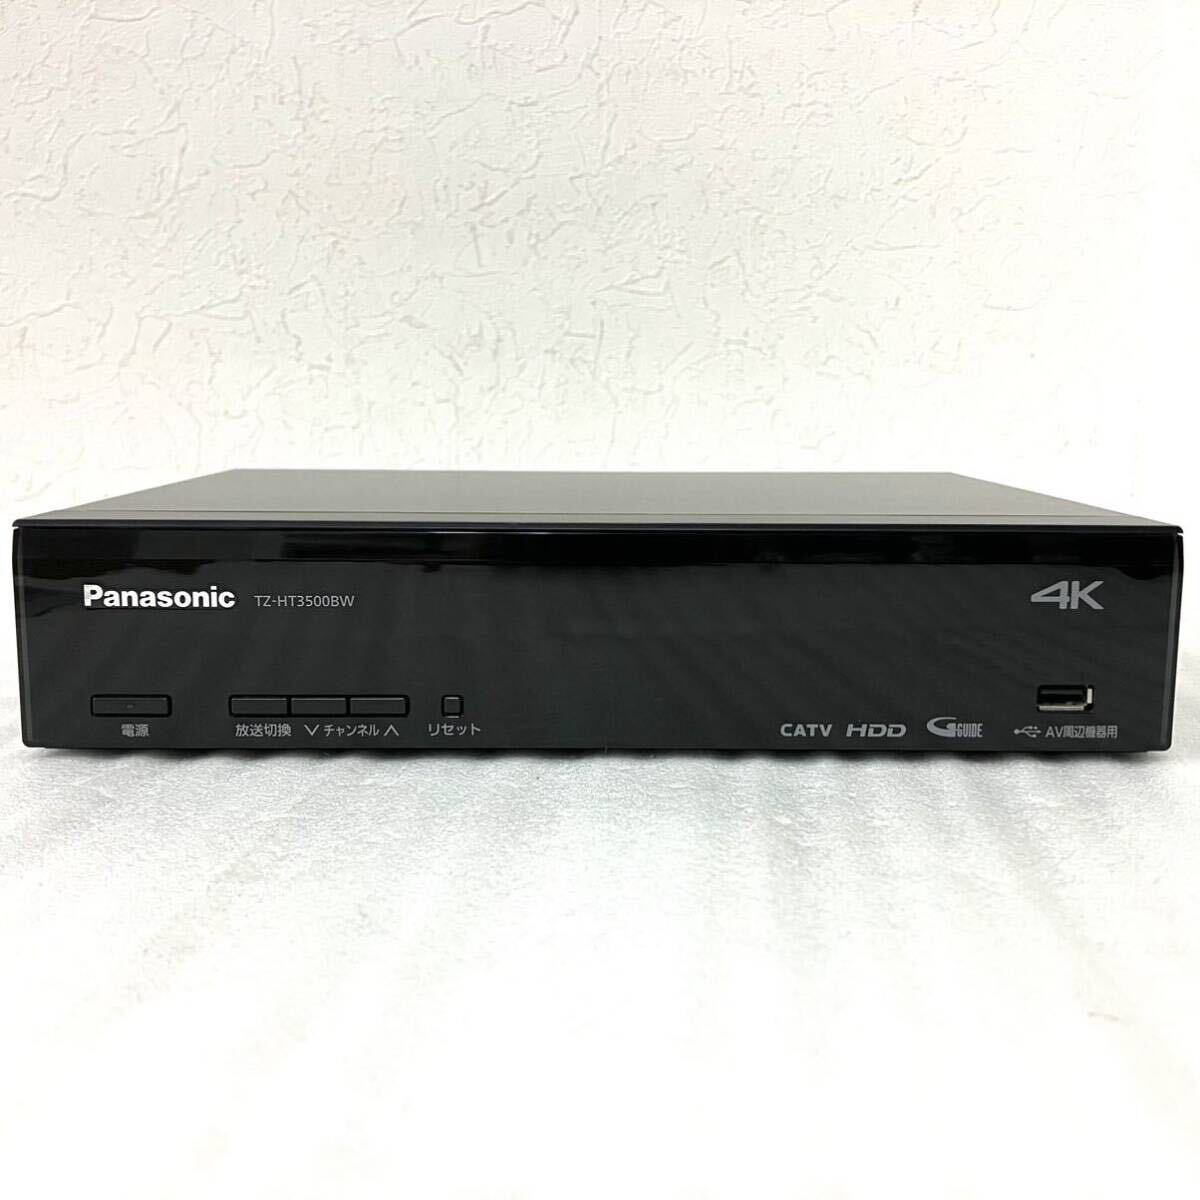 Panasonic Panasonic CATV цифровой STB TZ-HT3500BW тюнер BS CS HDD жесткий диск 4K тюнер 